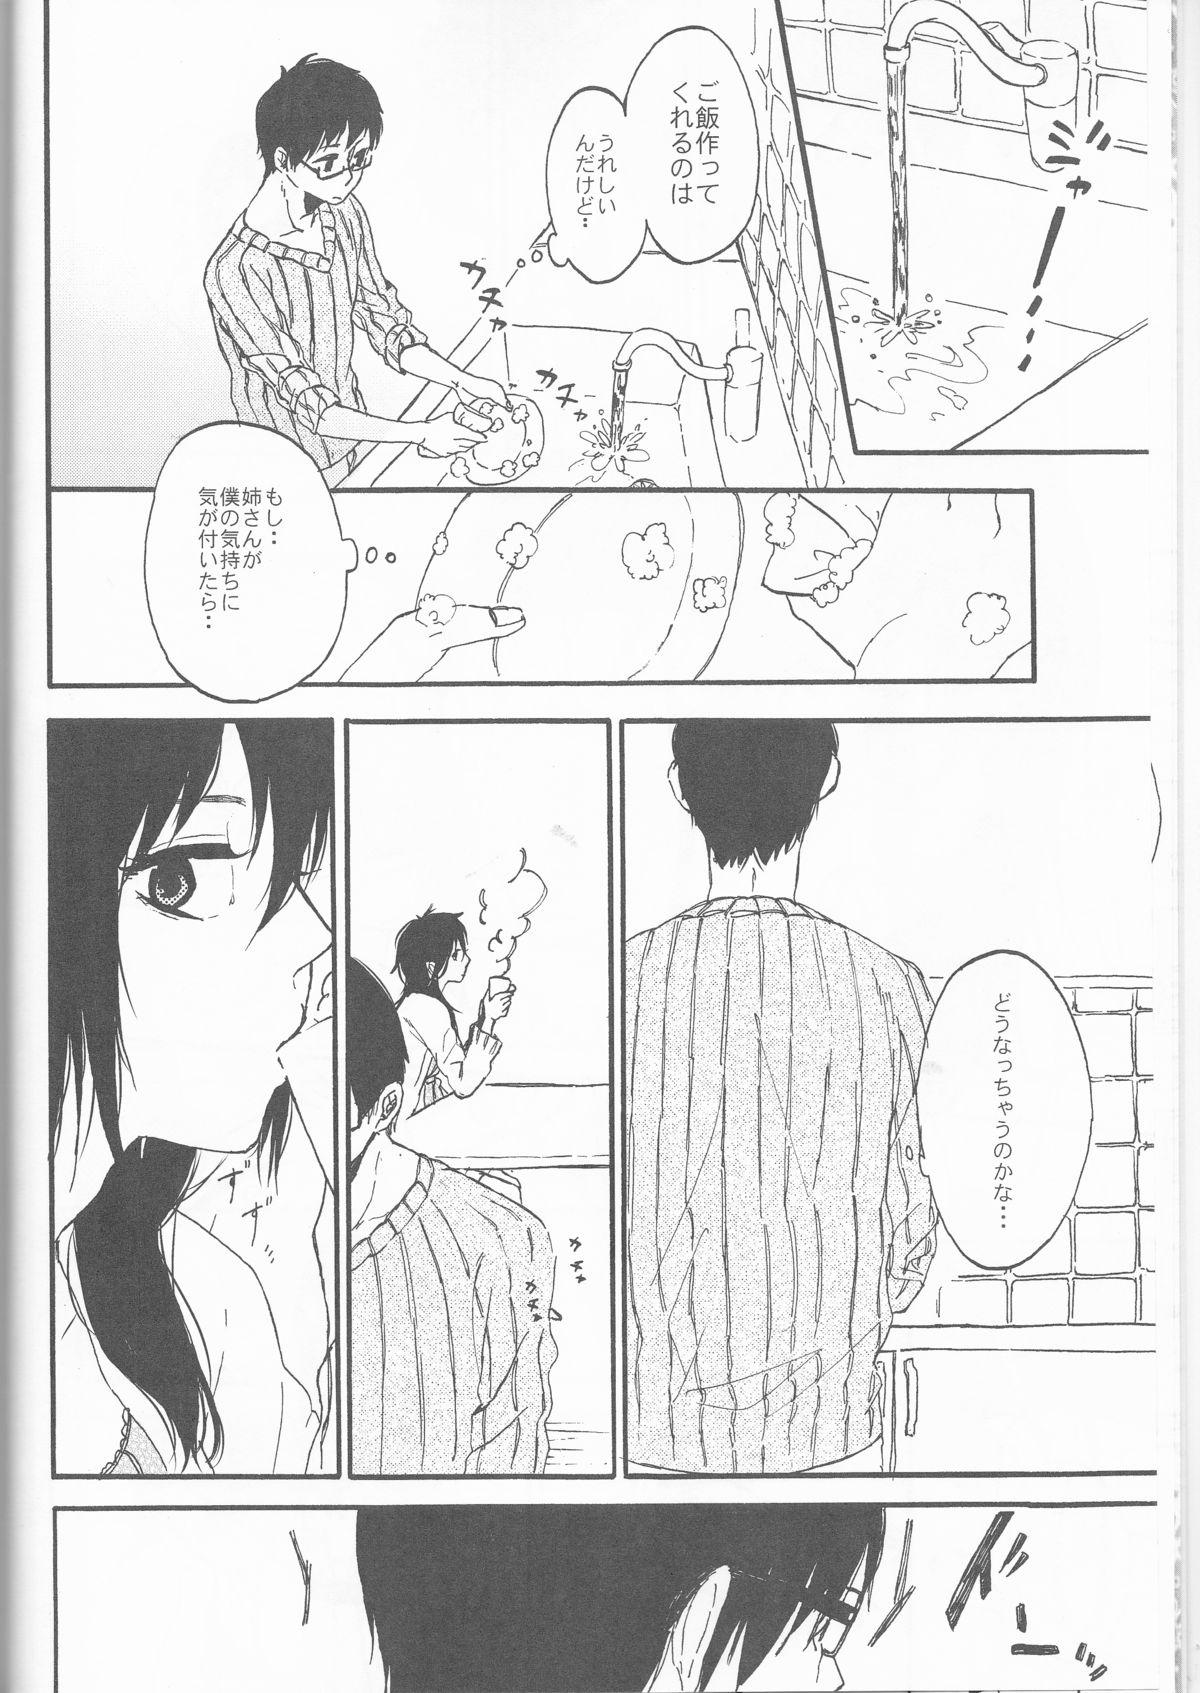 Behind 雪男*燐♀アンソロジー【デリケートに好きして】 - Ao no exorcist Animated - Page 7